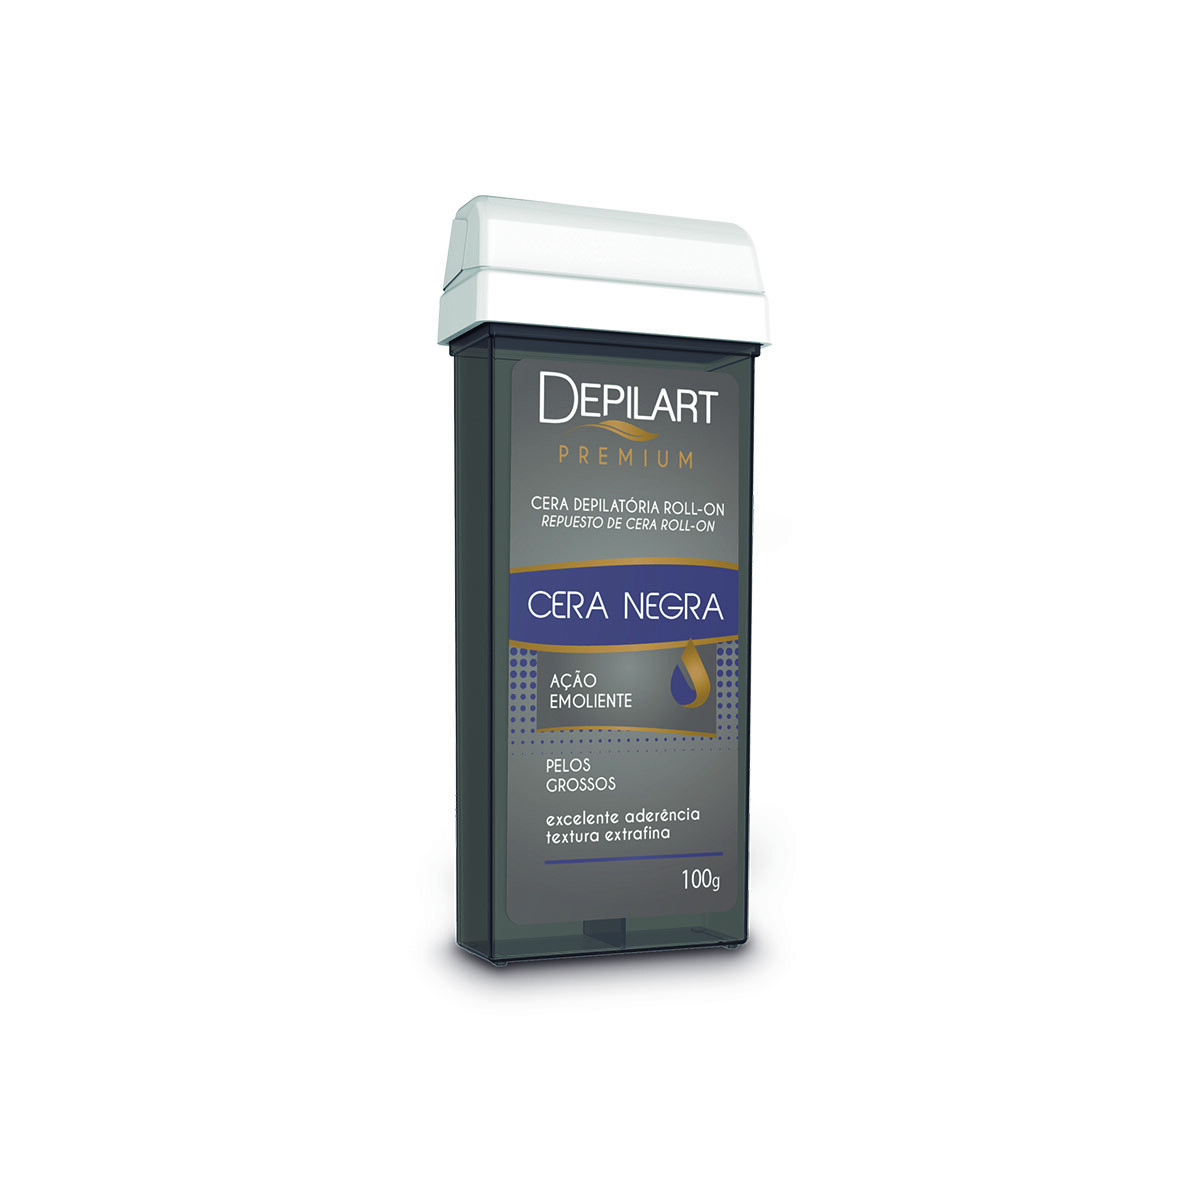 Cera depilatoria en roll on línea premium Depilart x 100 gr OFERTA CAJA X 24 - Cera negra 